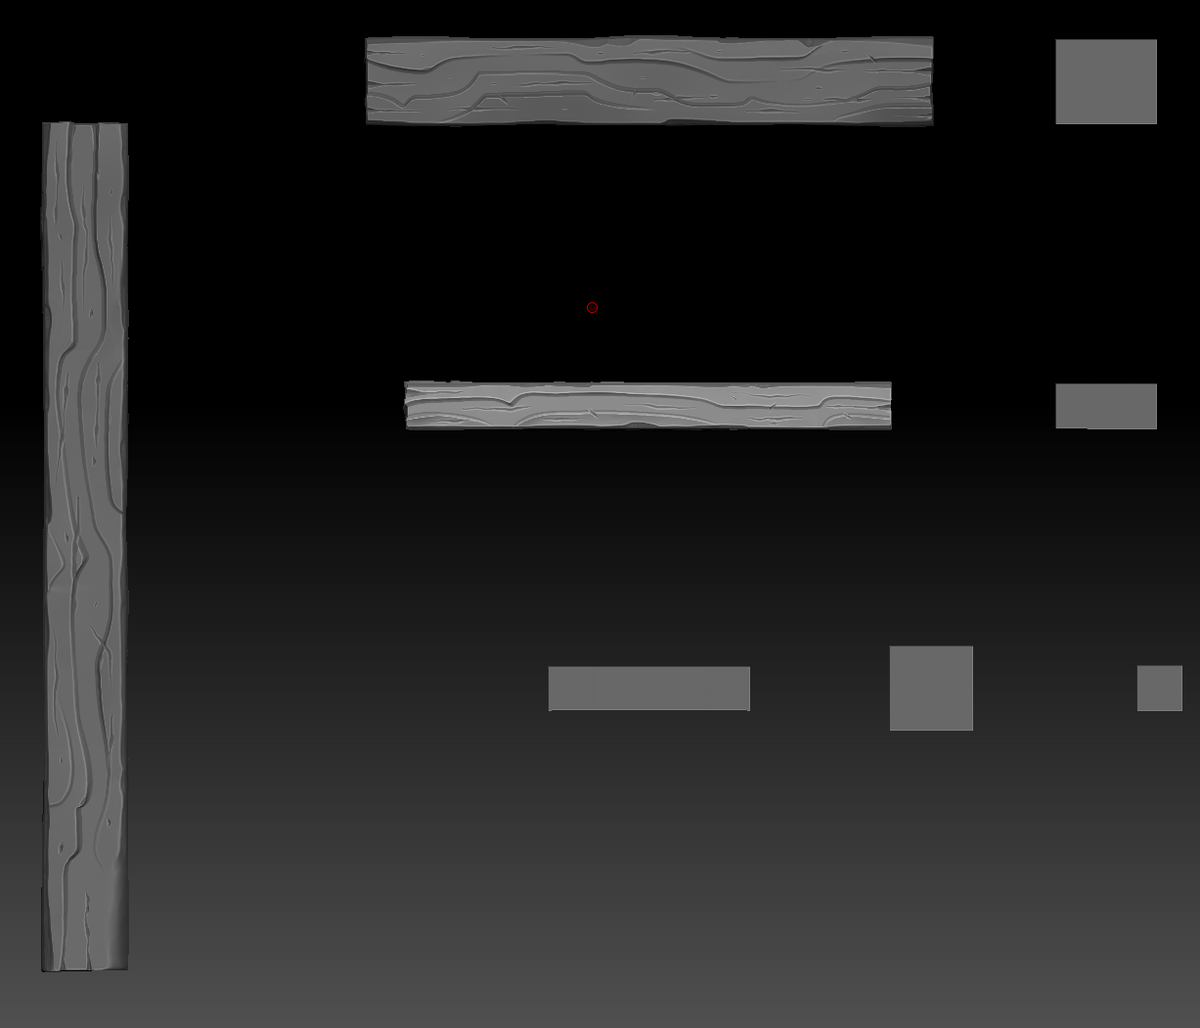 Day 10 : sulpt of the wood elements almost done.

#sculpt #zbrush #zbrushsculpt #3d #3dsculpt #wood #woodpillar #stylized #stylizedart #stylizedstation #digitalart #digitalsculpt #digitalsculpting